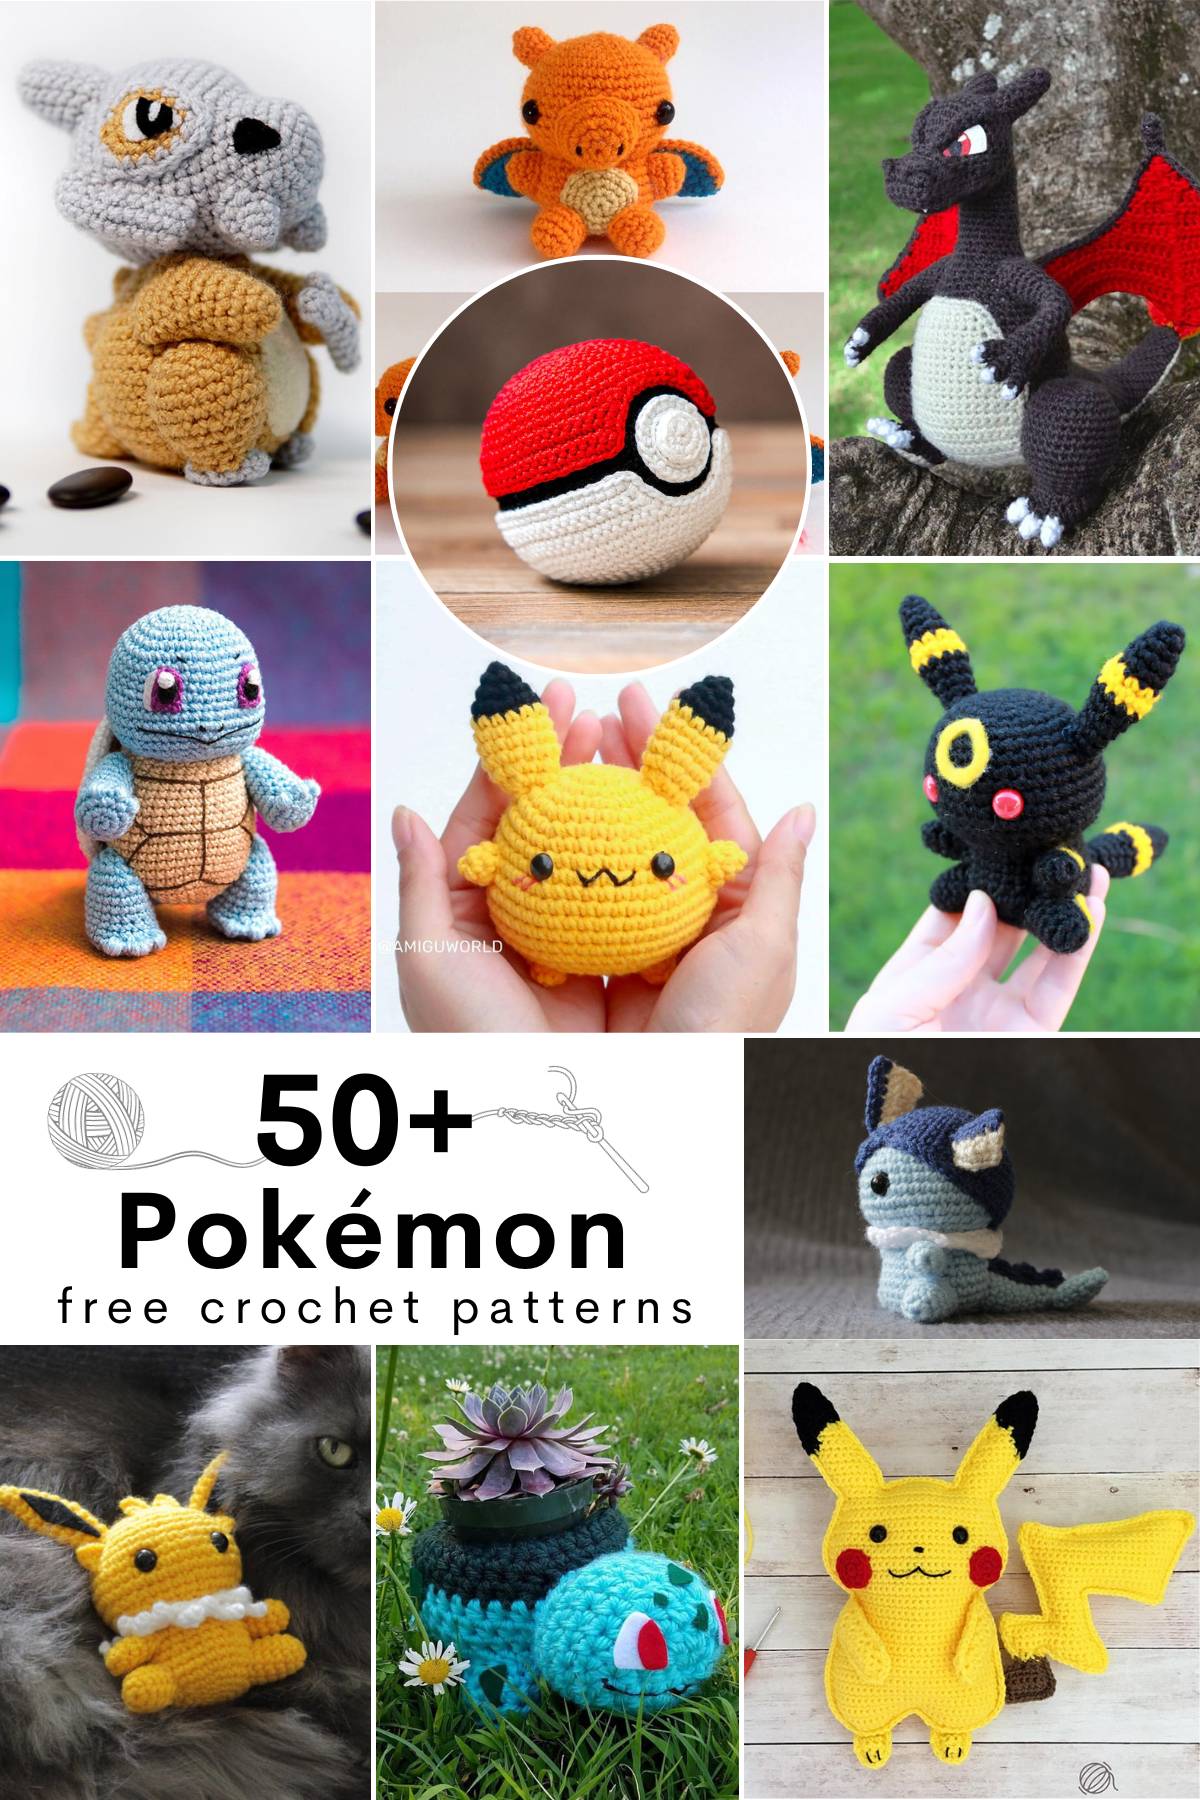 Pokémon Crochet: Bring your favorite Pokémon to life with 20 cute